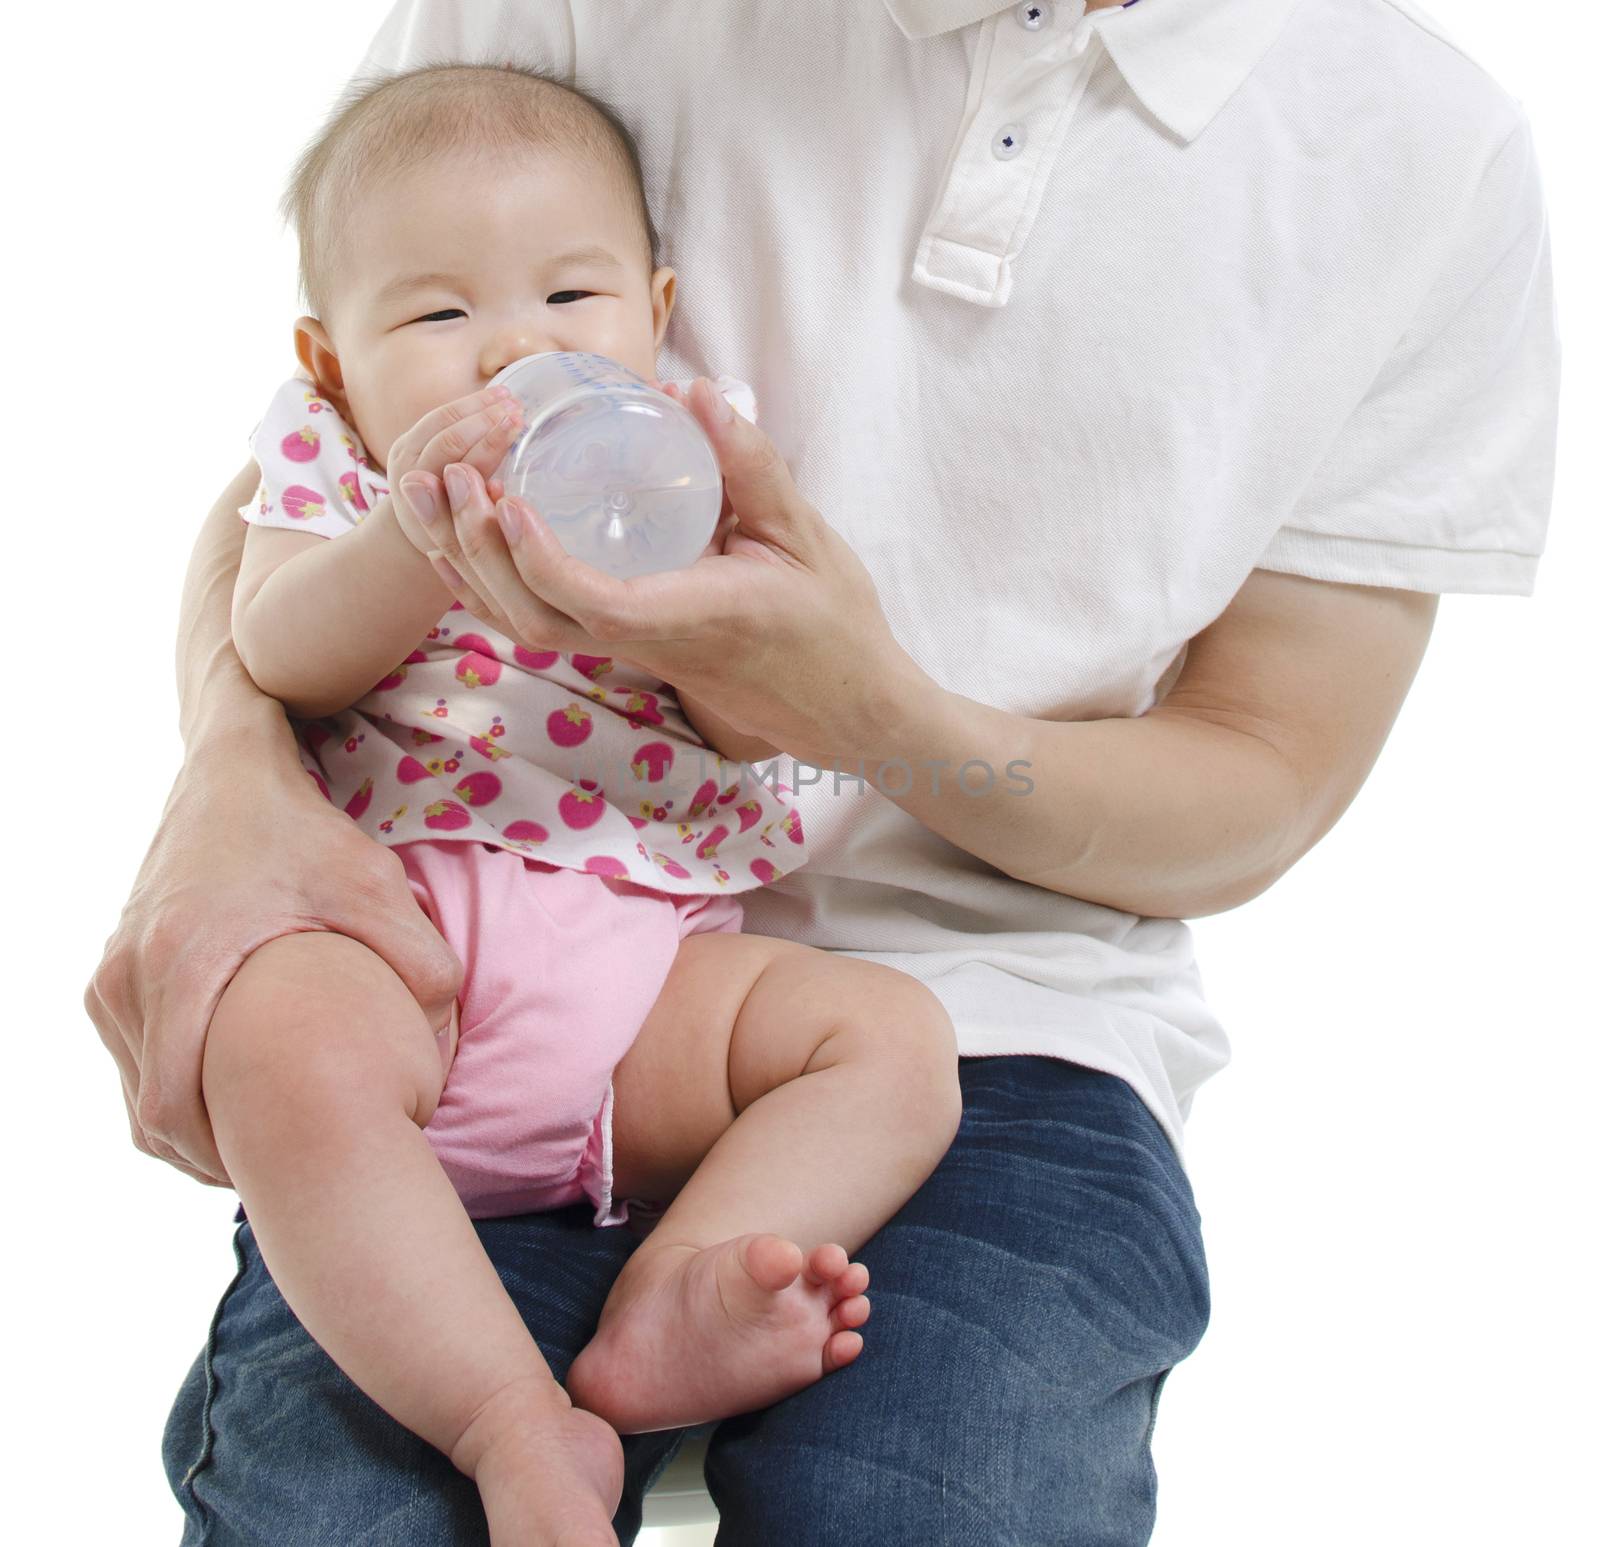 Asian father feeding baby girl drinking milk bottle, isolated on white background.